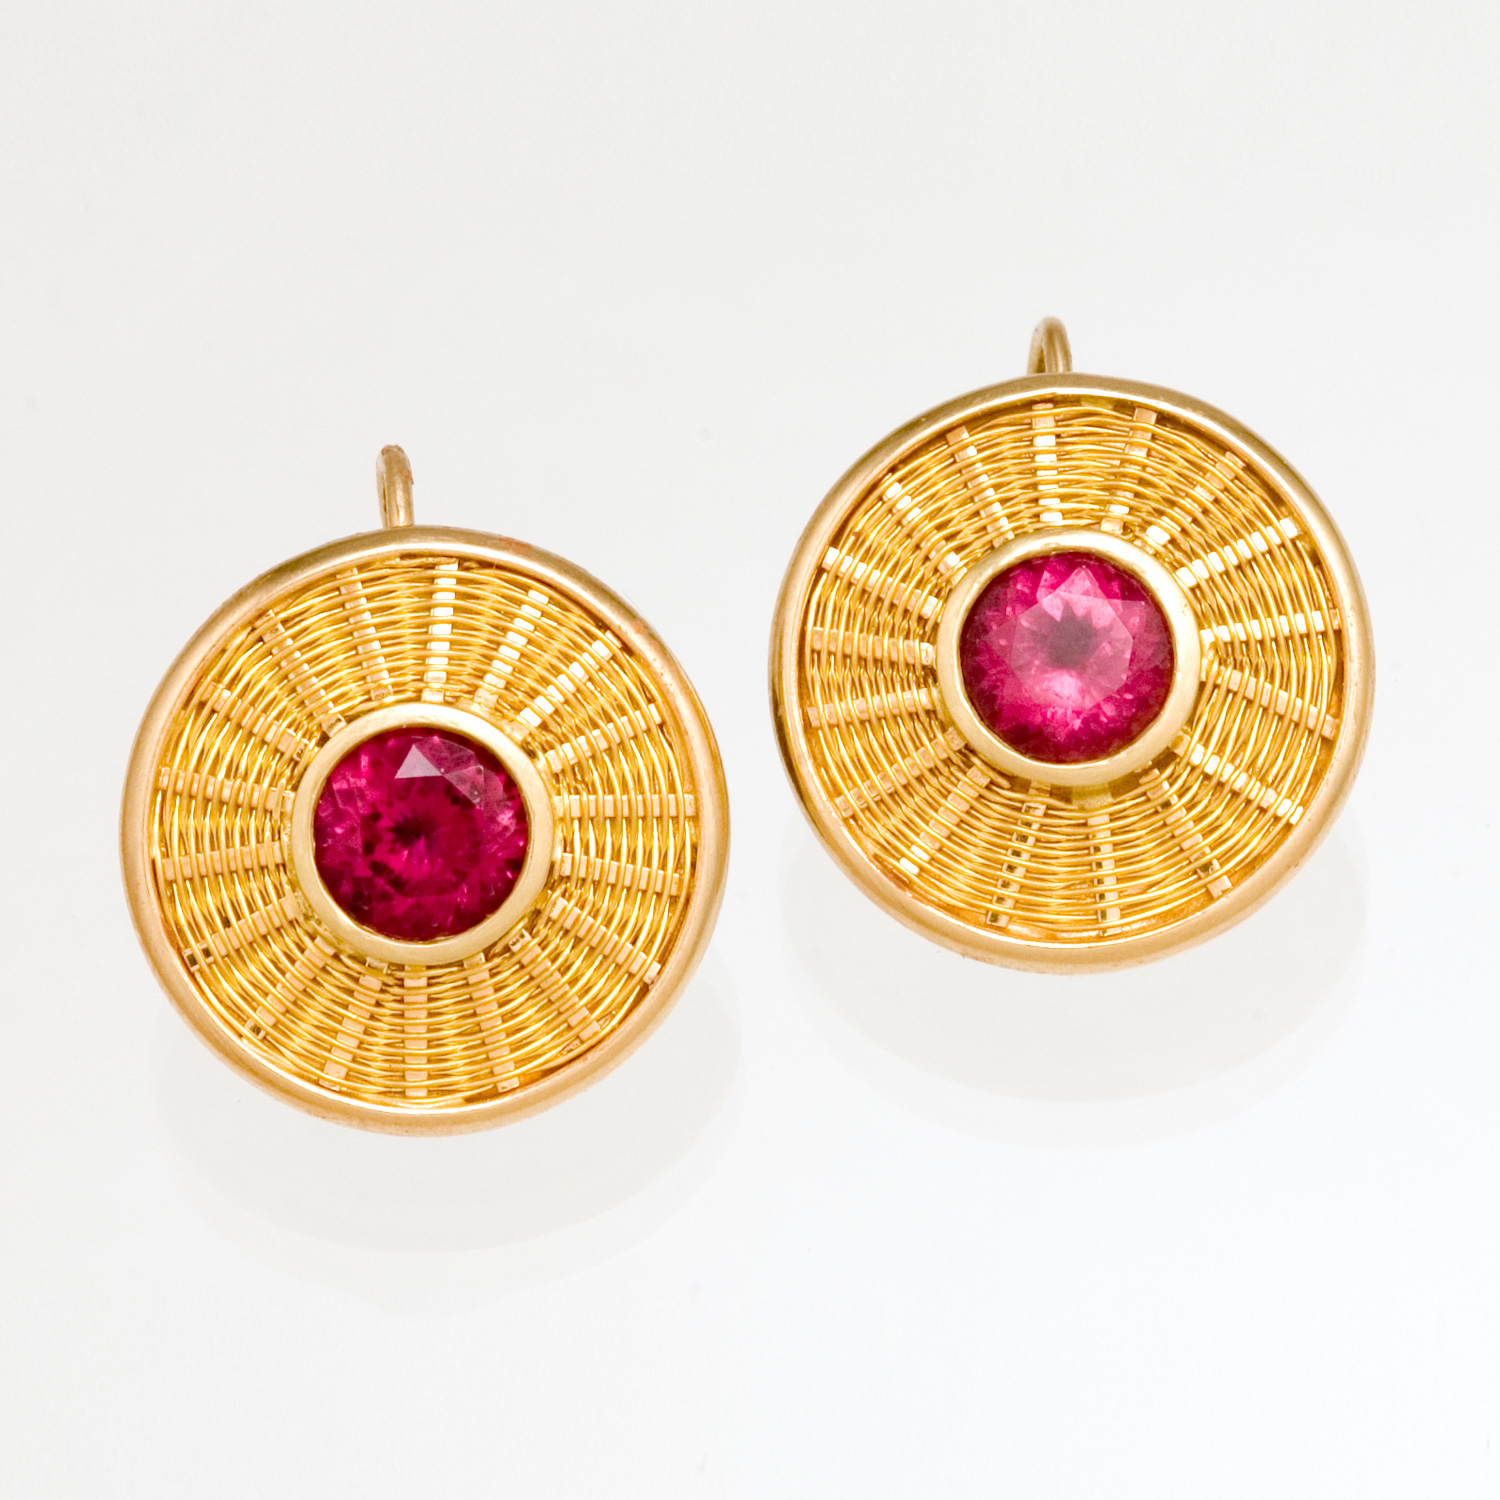 Sunburst Weave Earrings in 18k & 22k gold with rubellite tourmaline by Tamberlaine